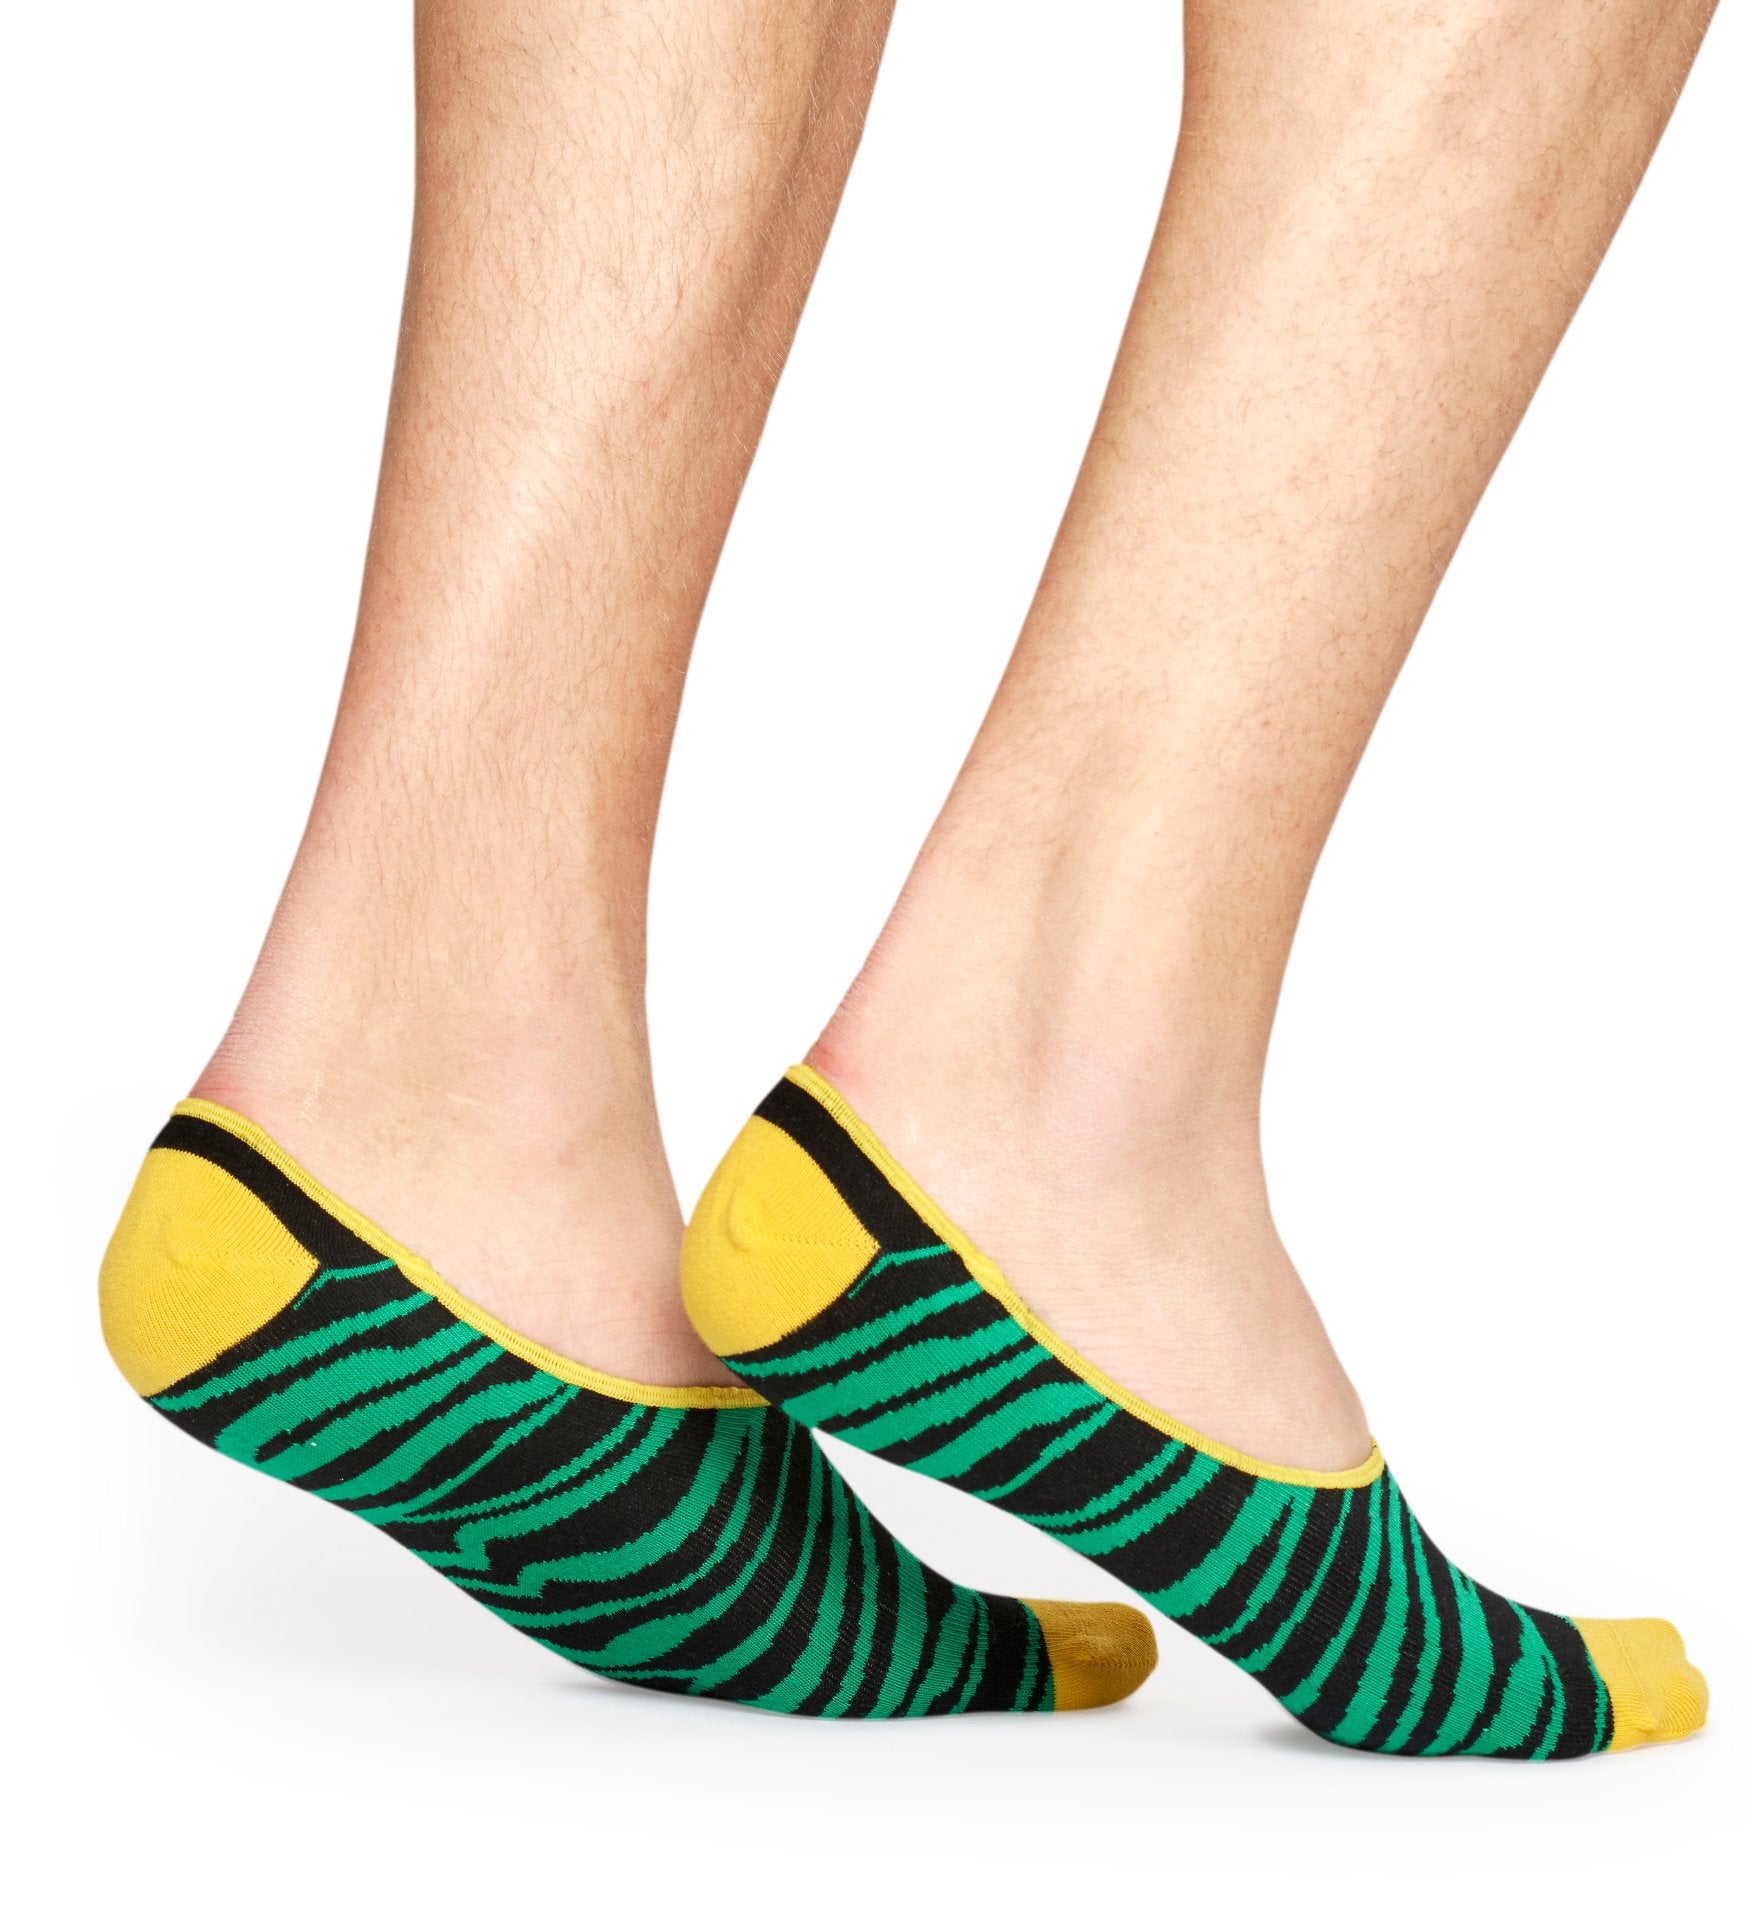 Zeleno-žluté nízké ponožky Happy Socks, vzor Zebra